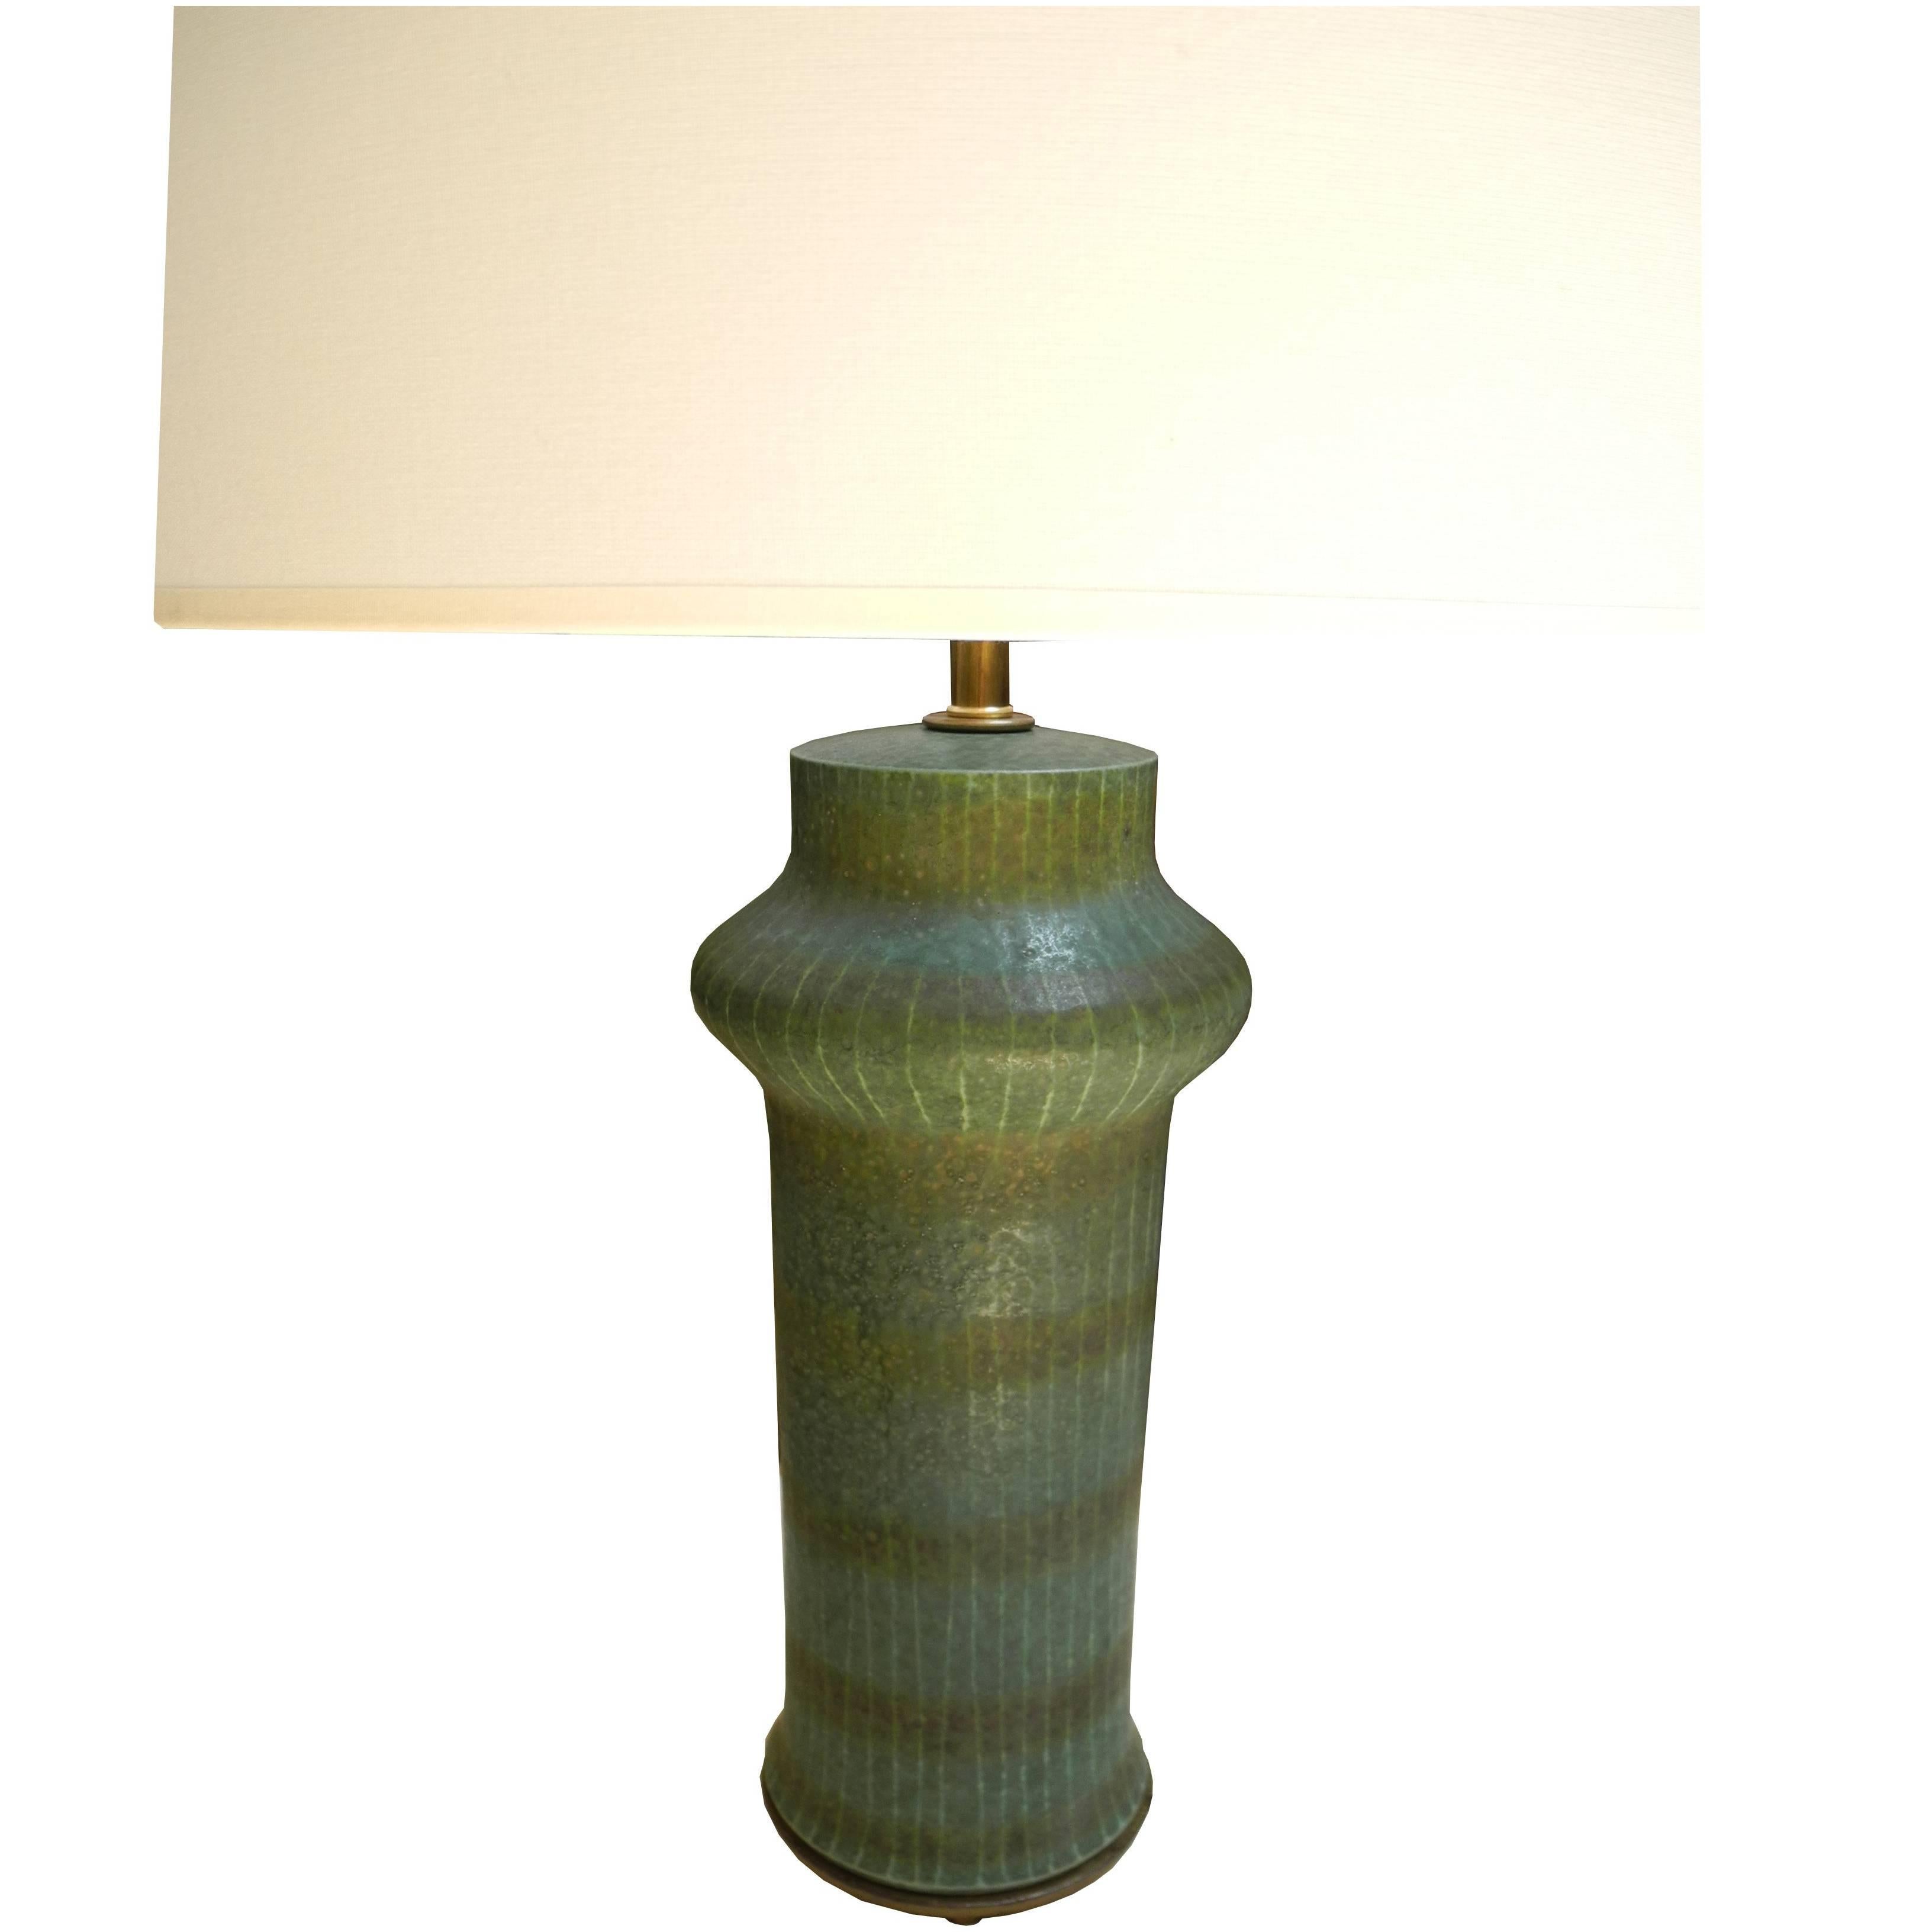 1950s Modern Asian Vessel Style Italian Ceramic Green Table Lamp For Sale